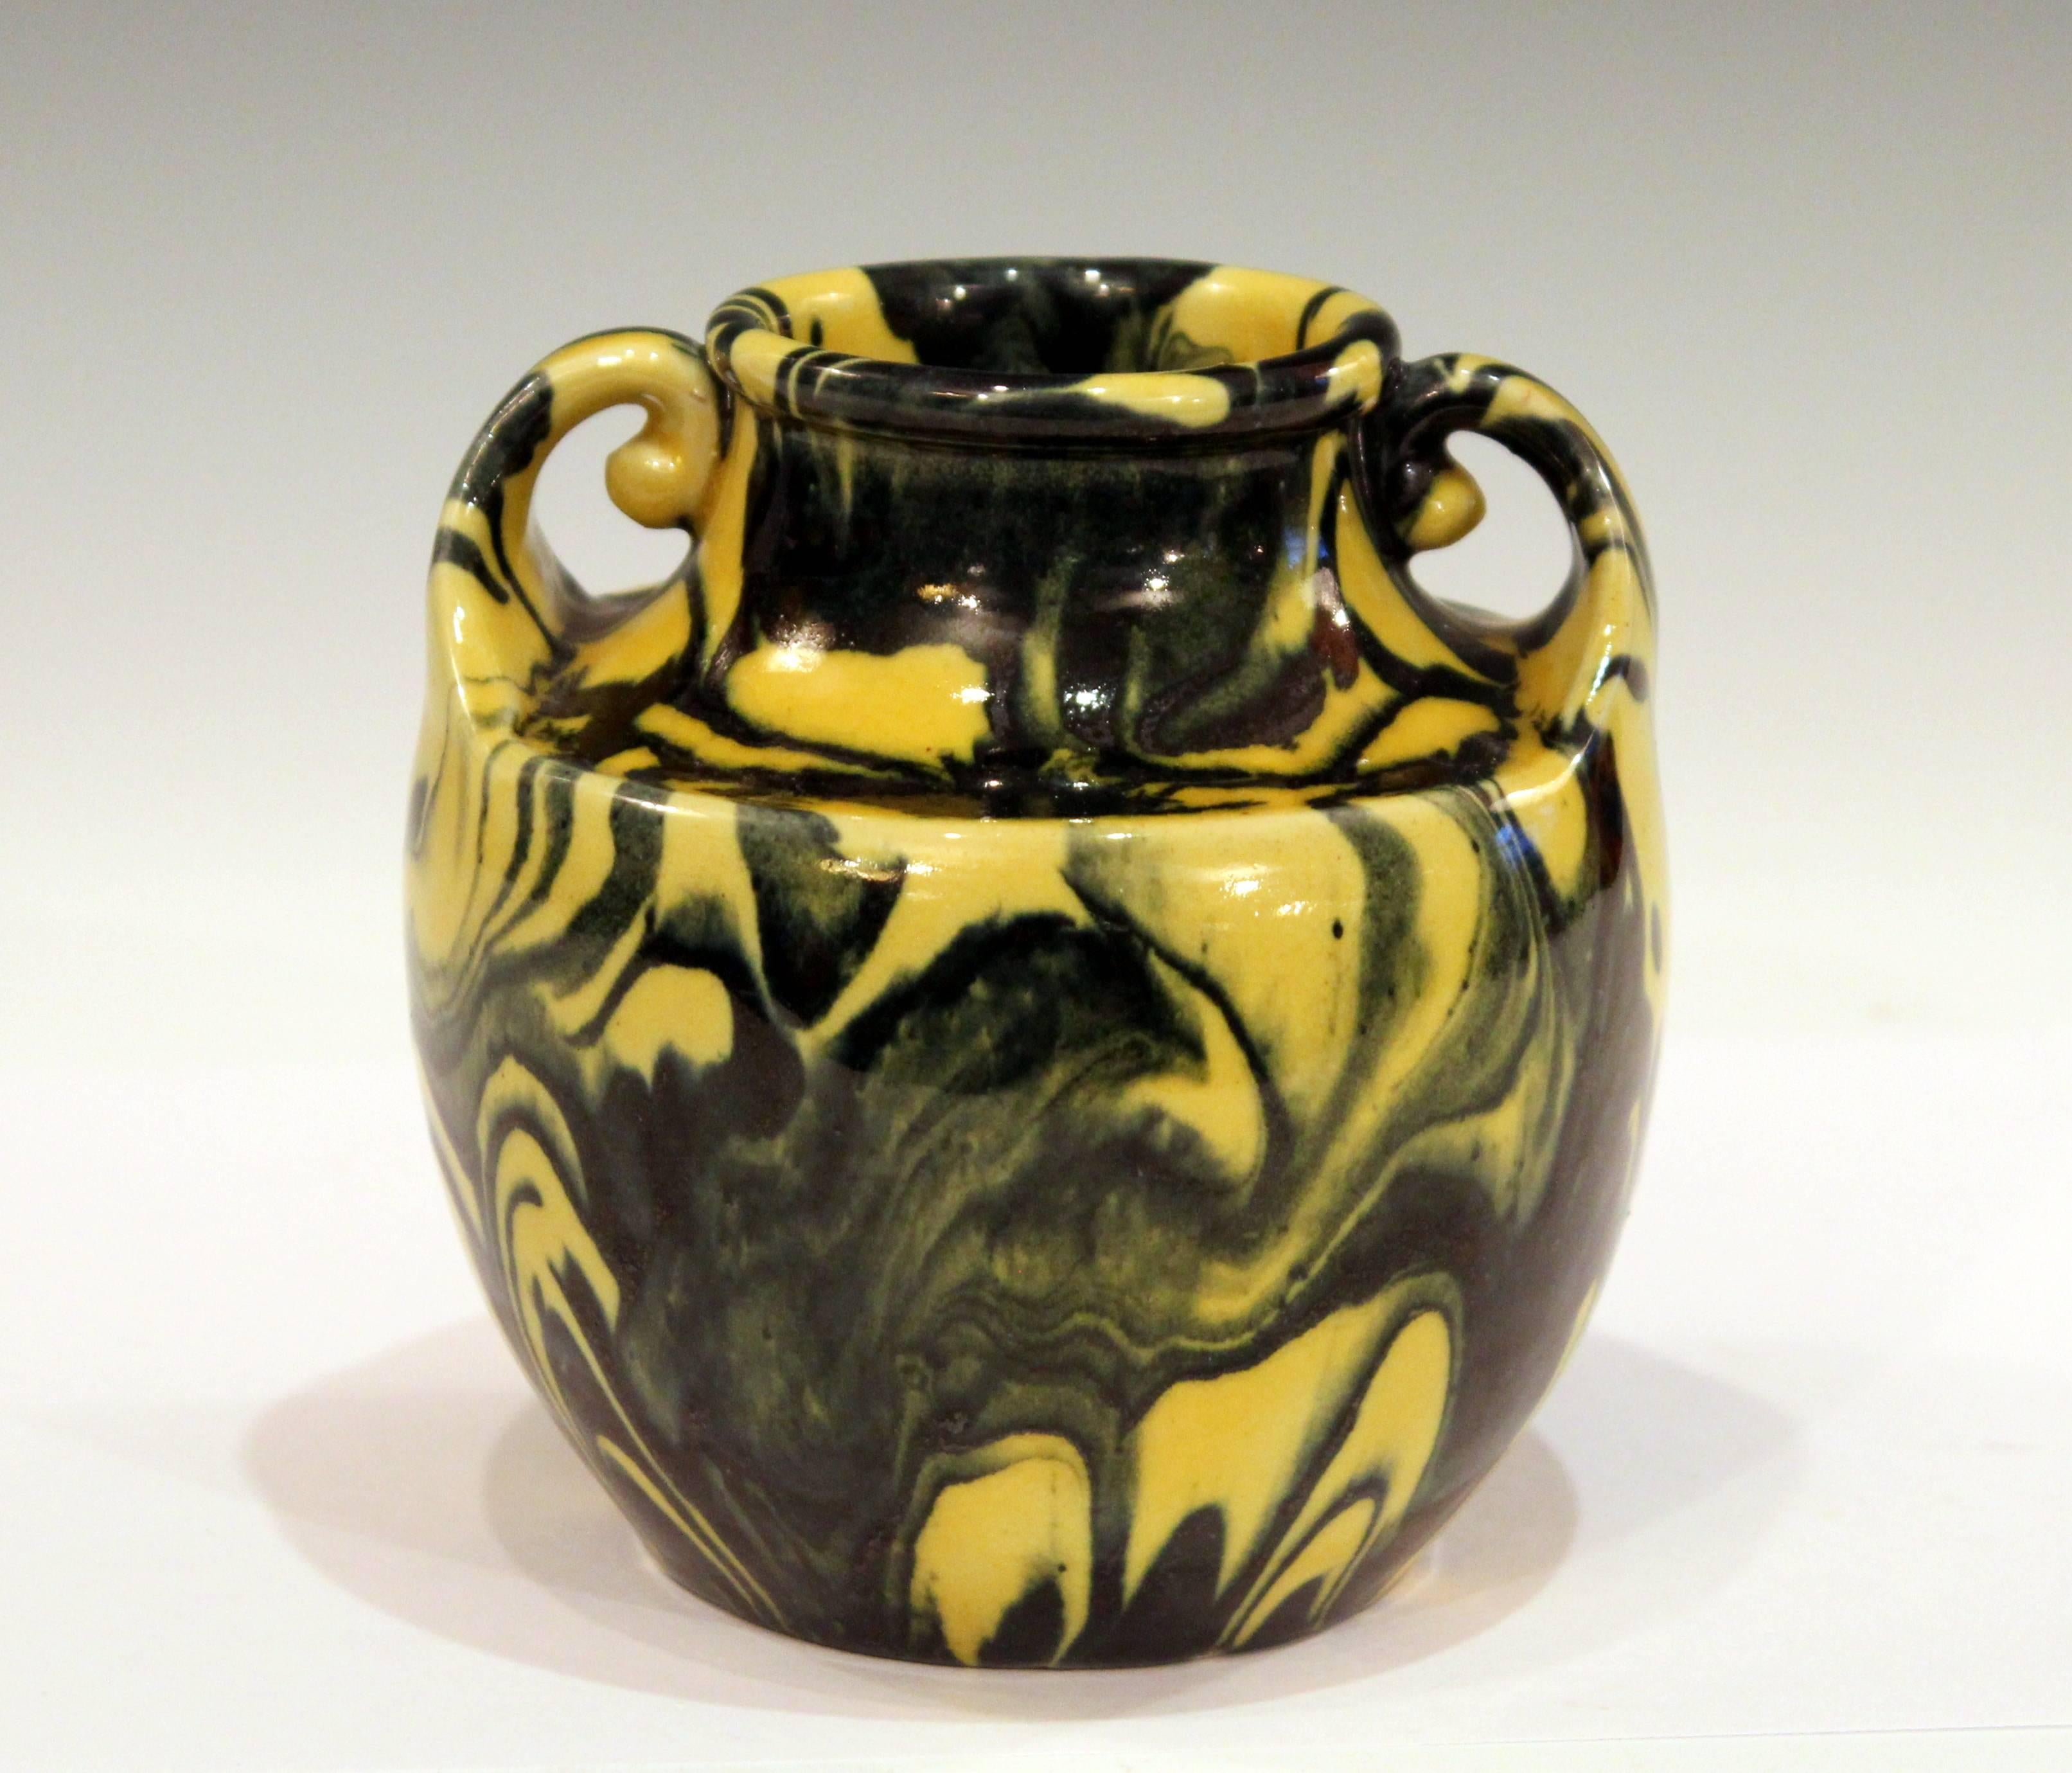 Awaji Pottery Art Deco Studio Japanese Marbled Metallic Yellow and Black Vase 3